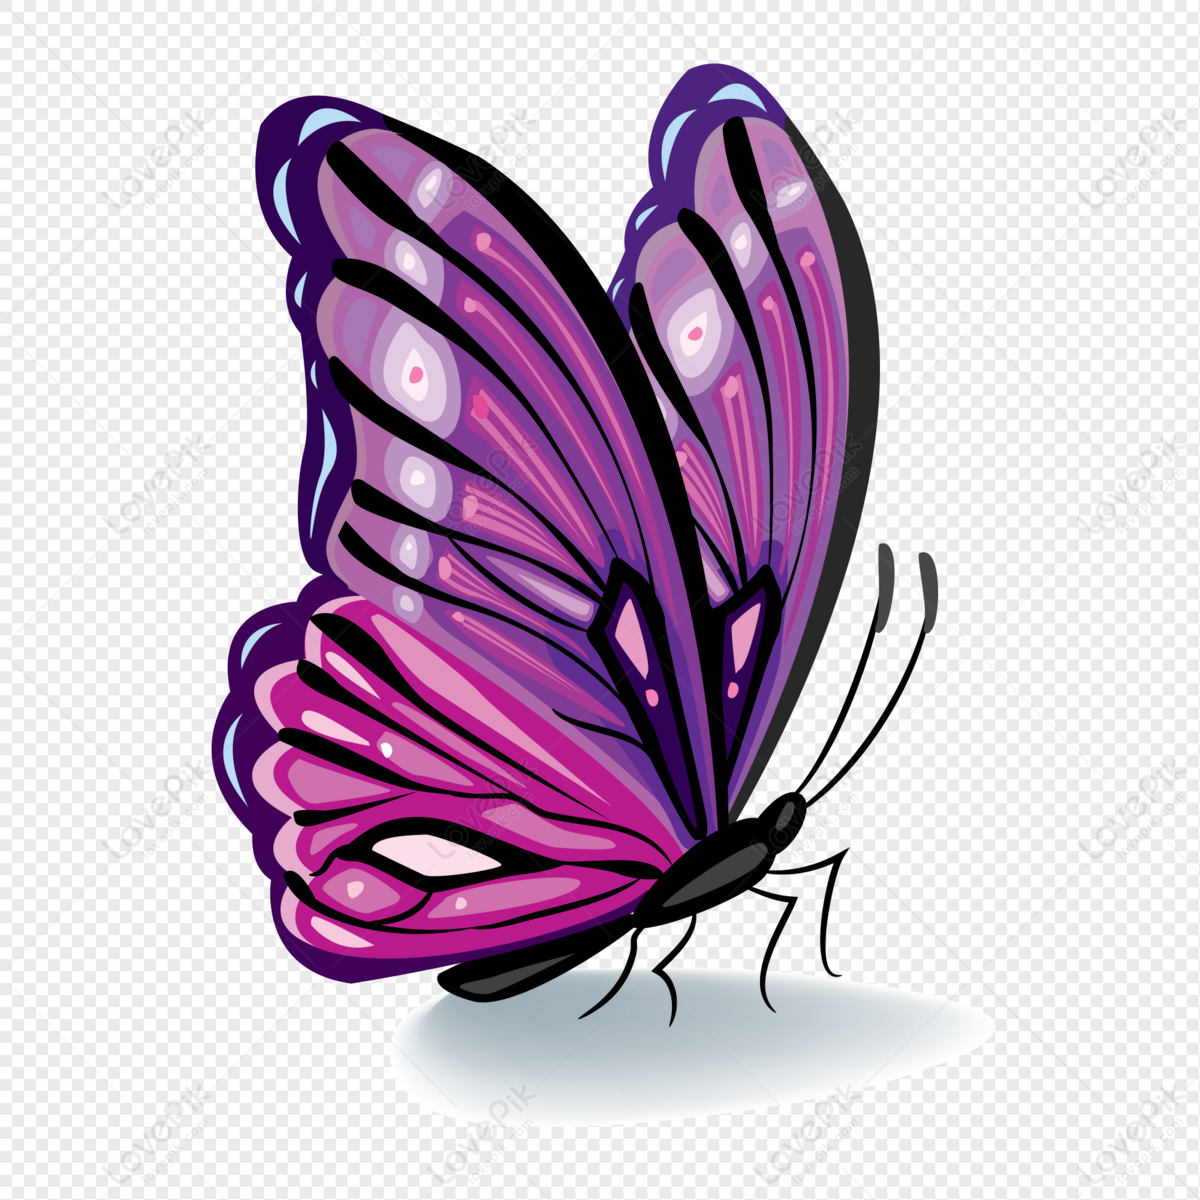 Free Aesthetic Purple Background - Download in Illustrator, EPS, SVG, JPG,  PNG